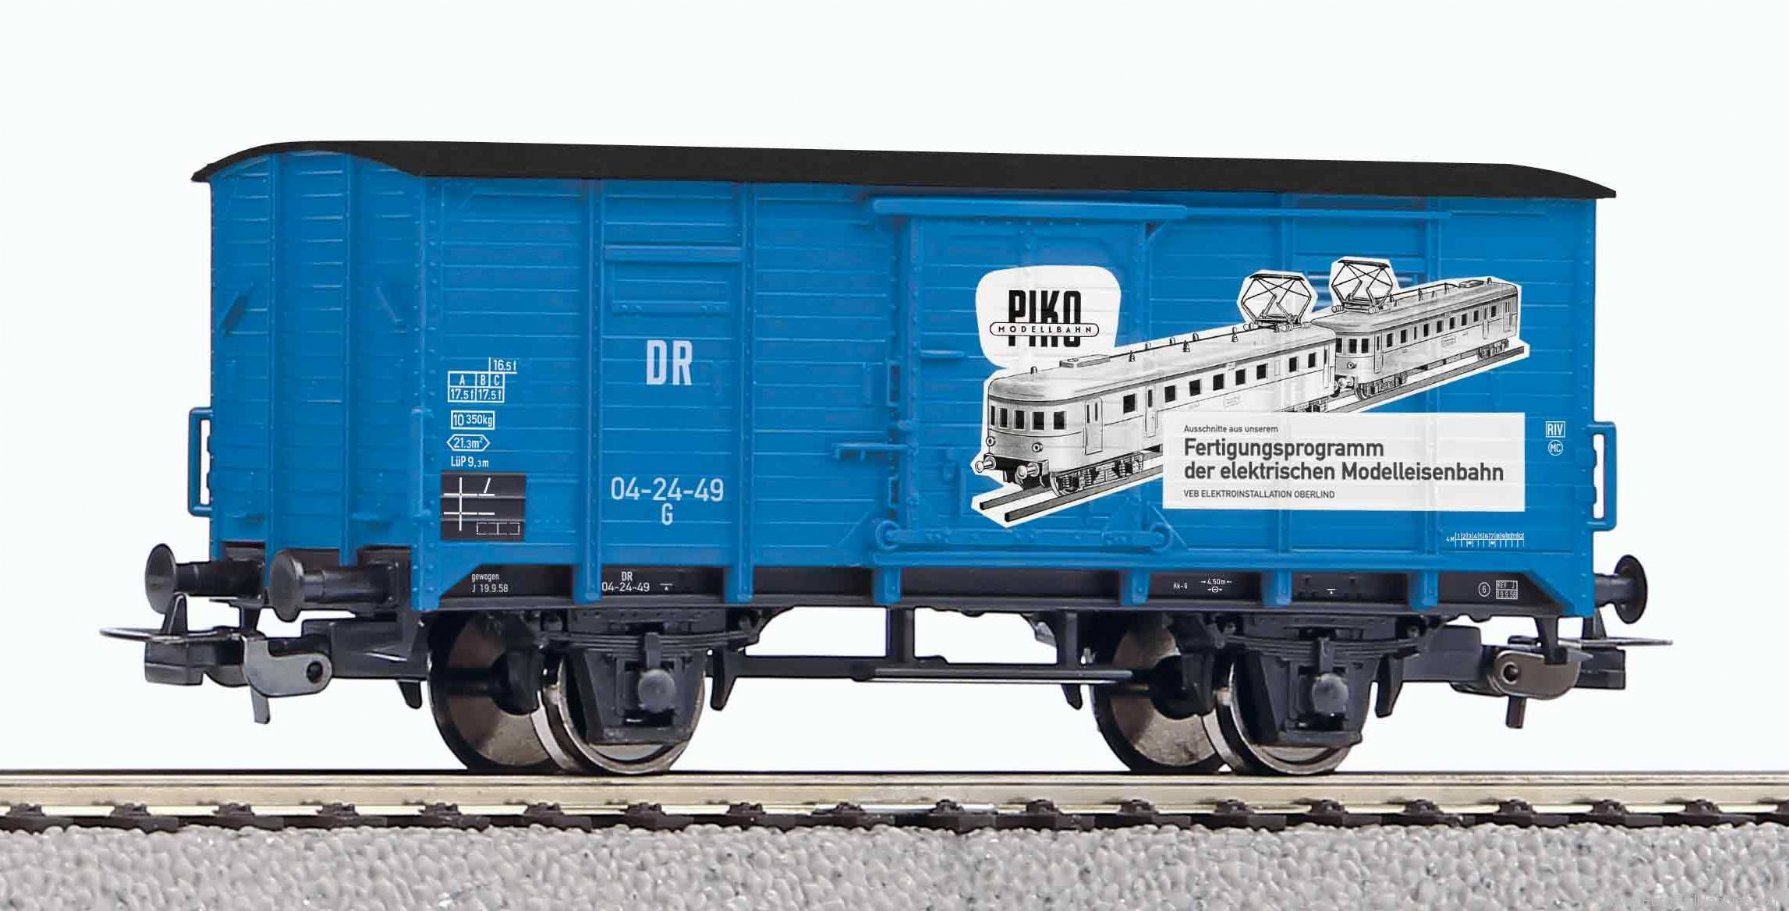 Piko 24502 Covered freight wagon G02 VEB PIKO DR III (Pi